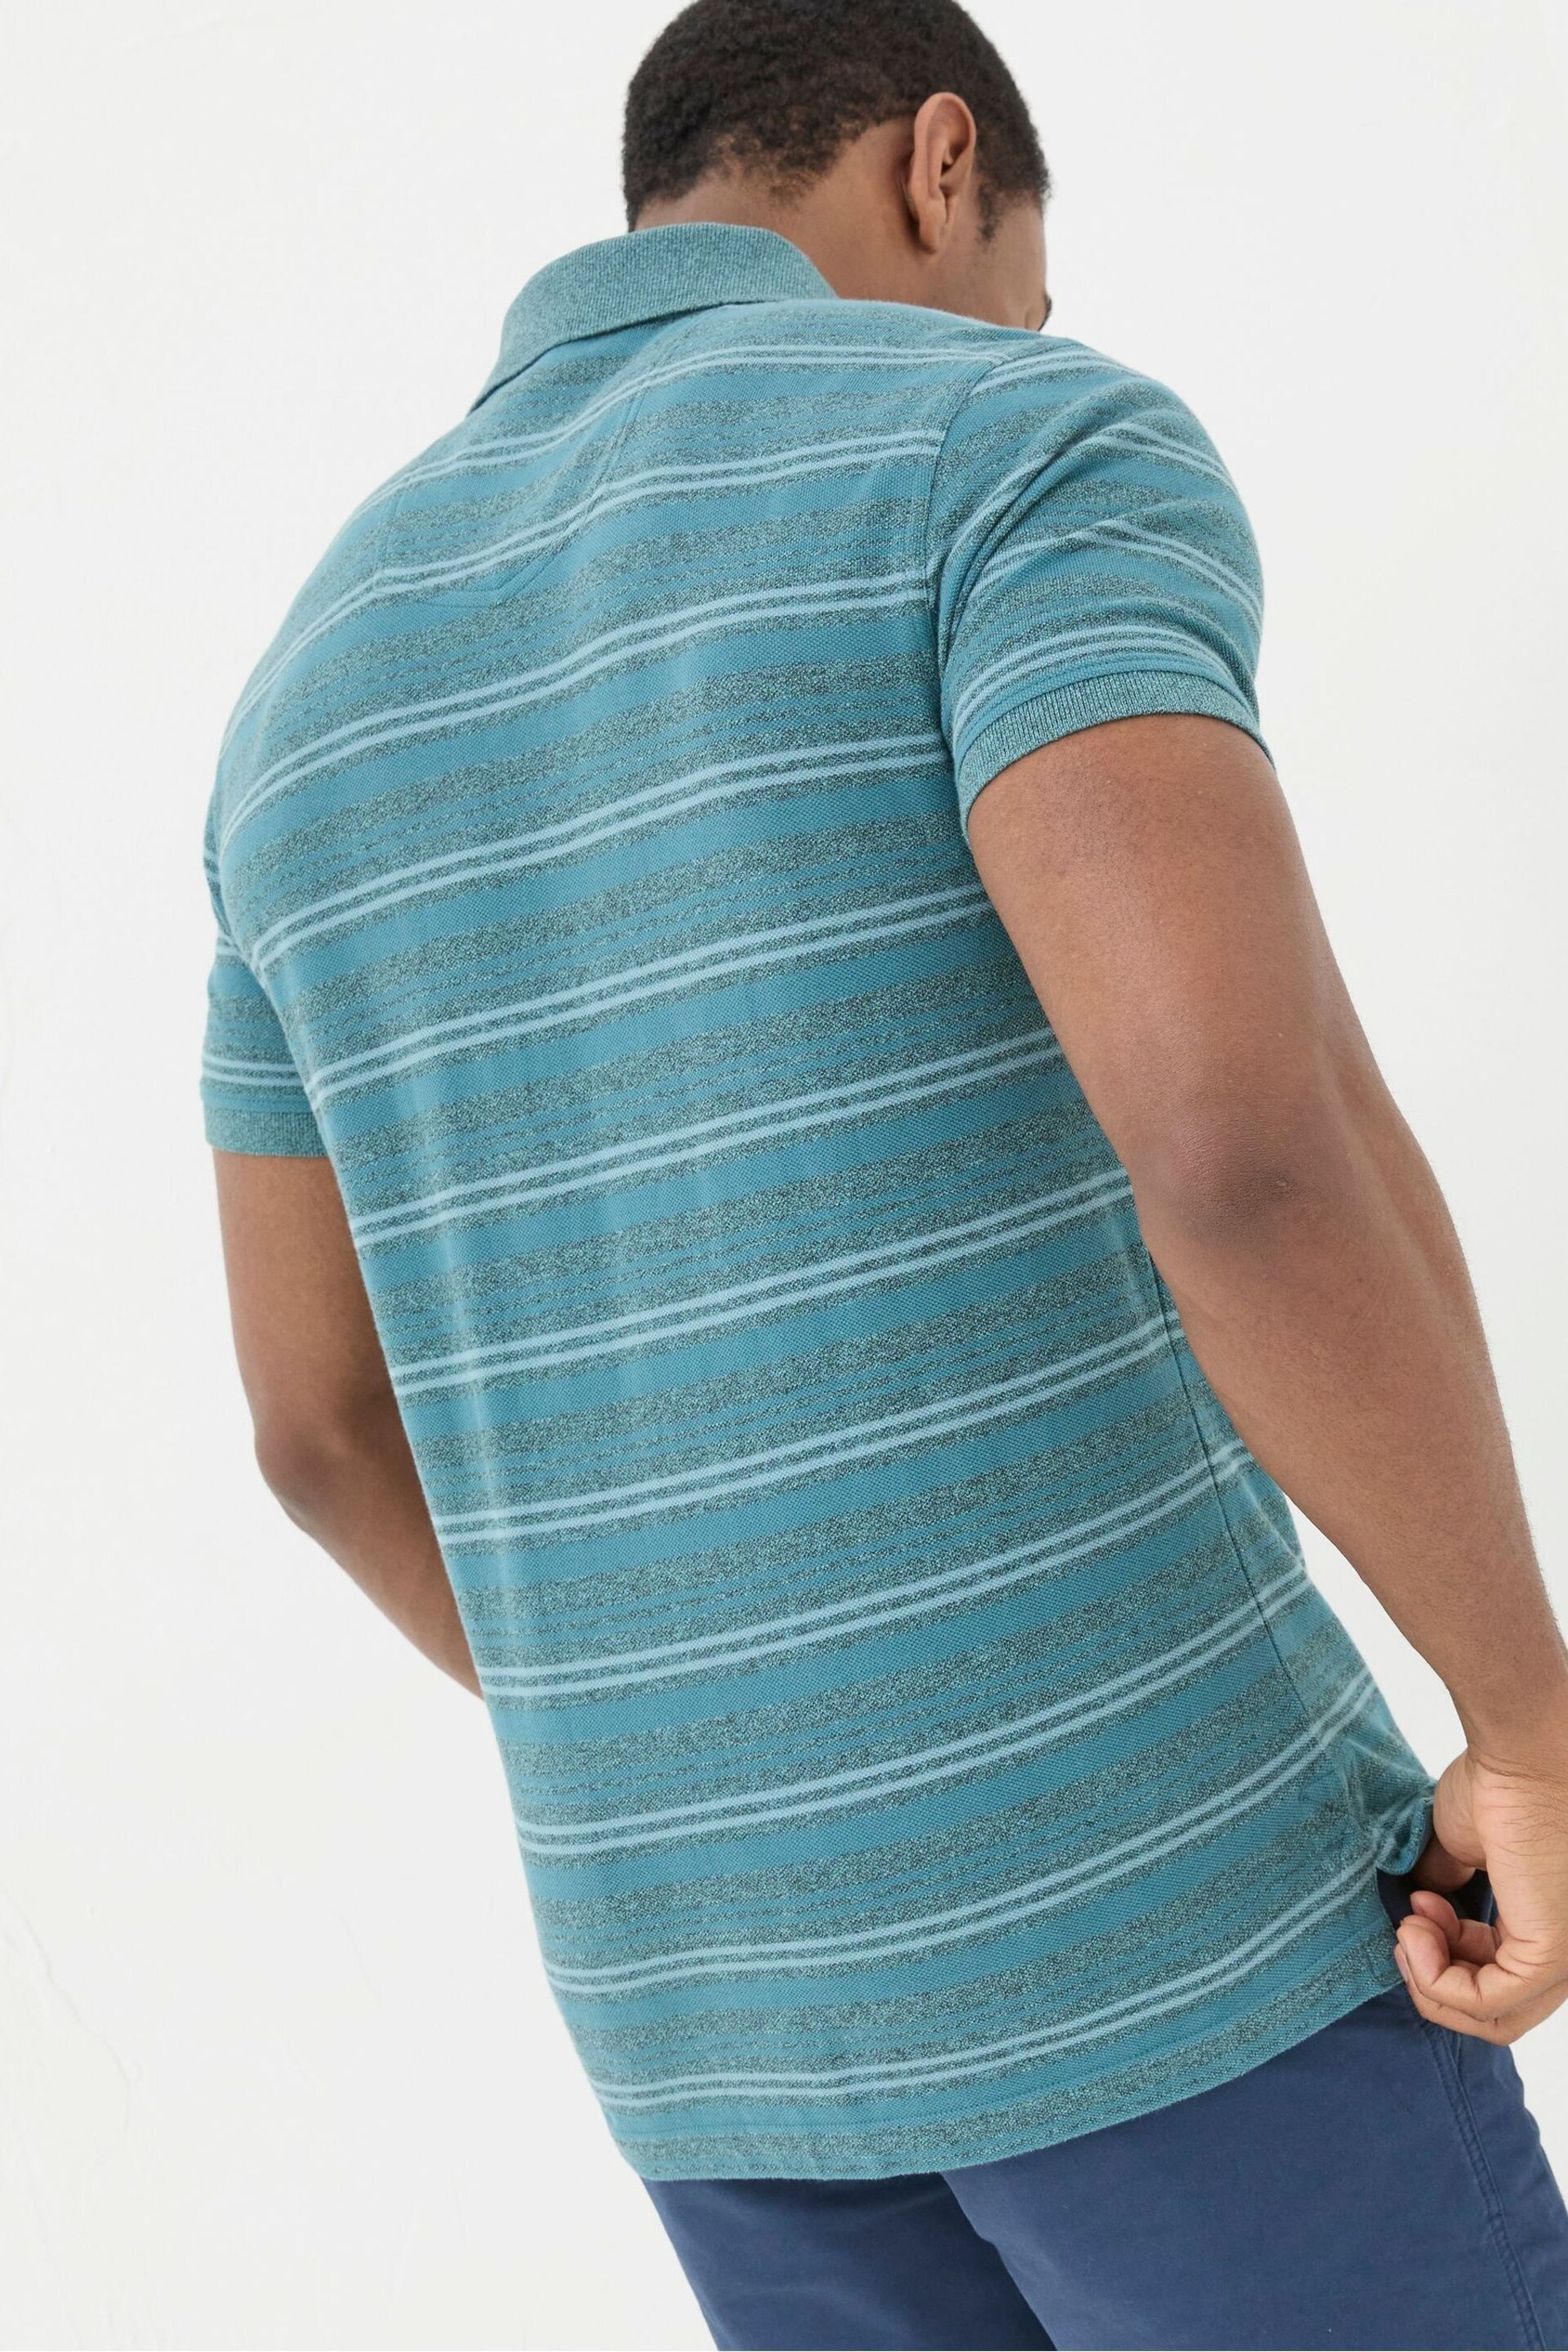 FatFace Blue Stripe Pique Polo Shirt - Image 5 of 8